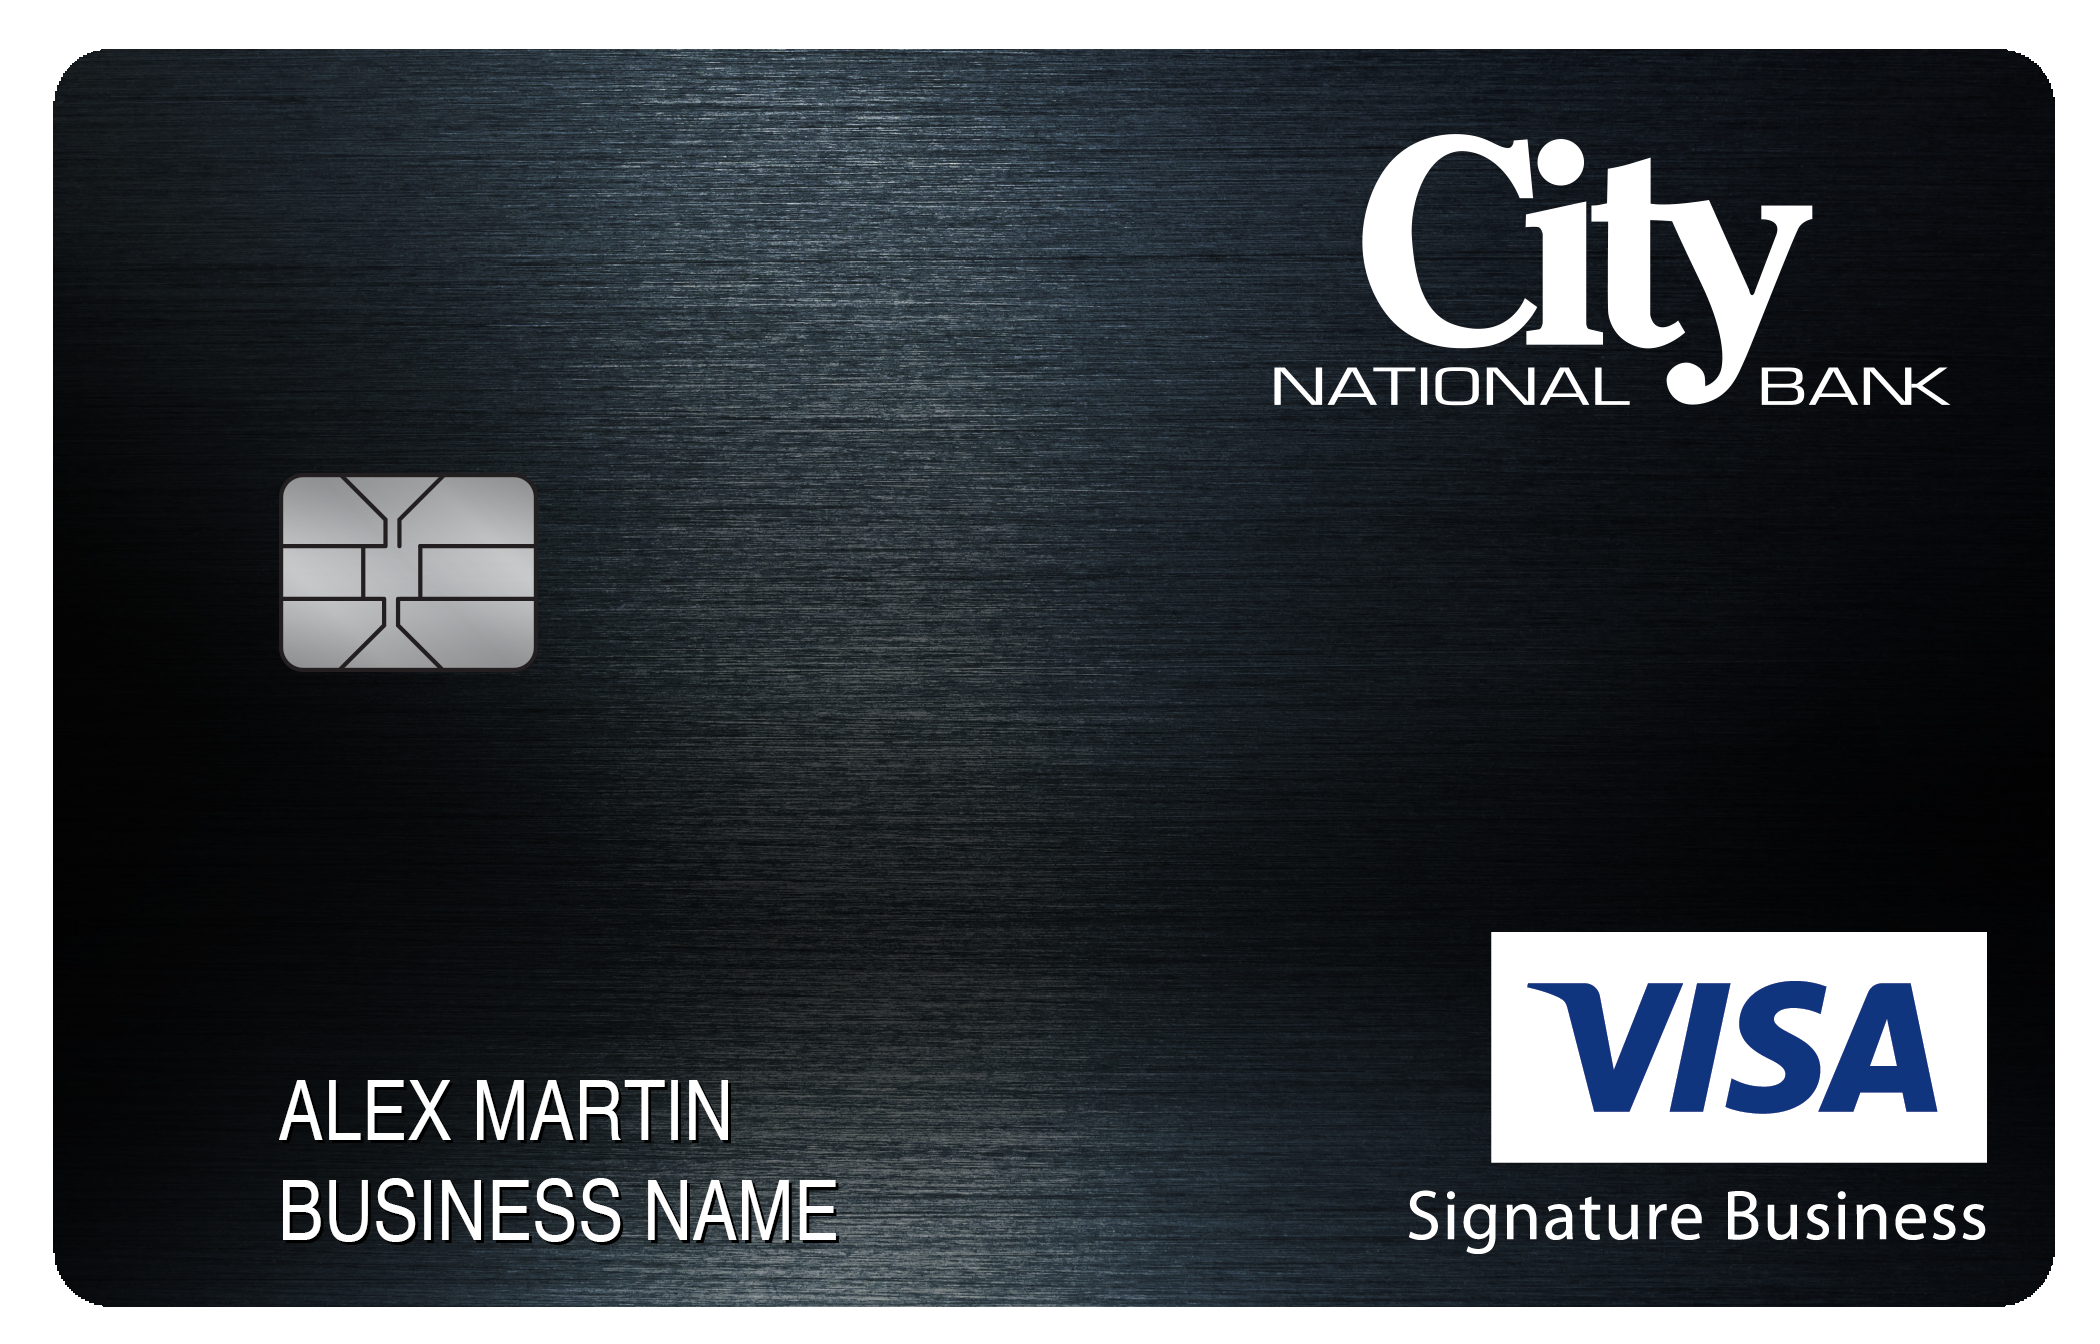 City National Bank Smart Business Rewards Card